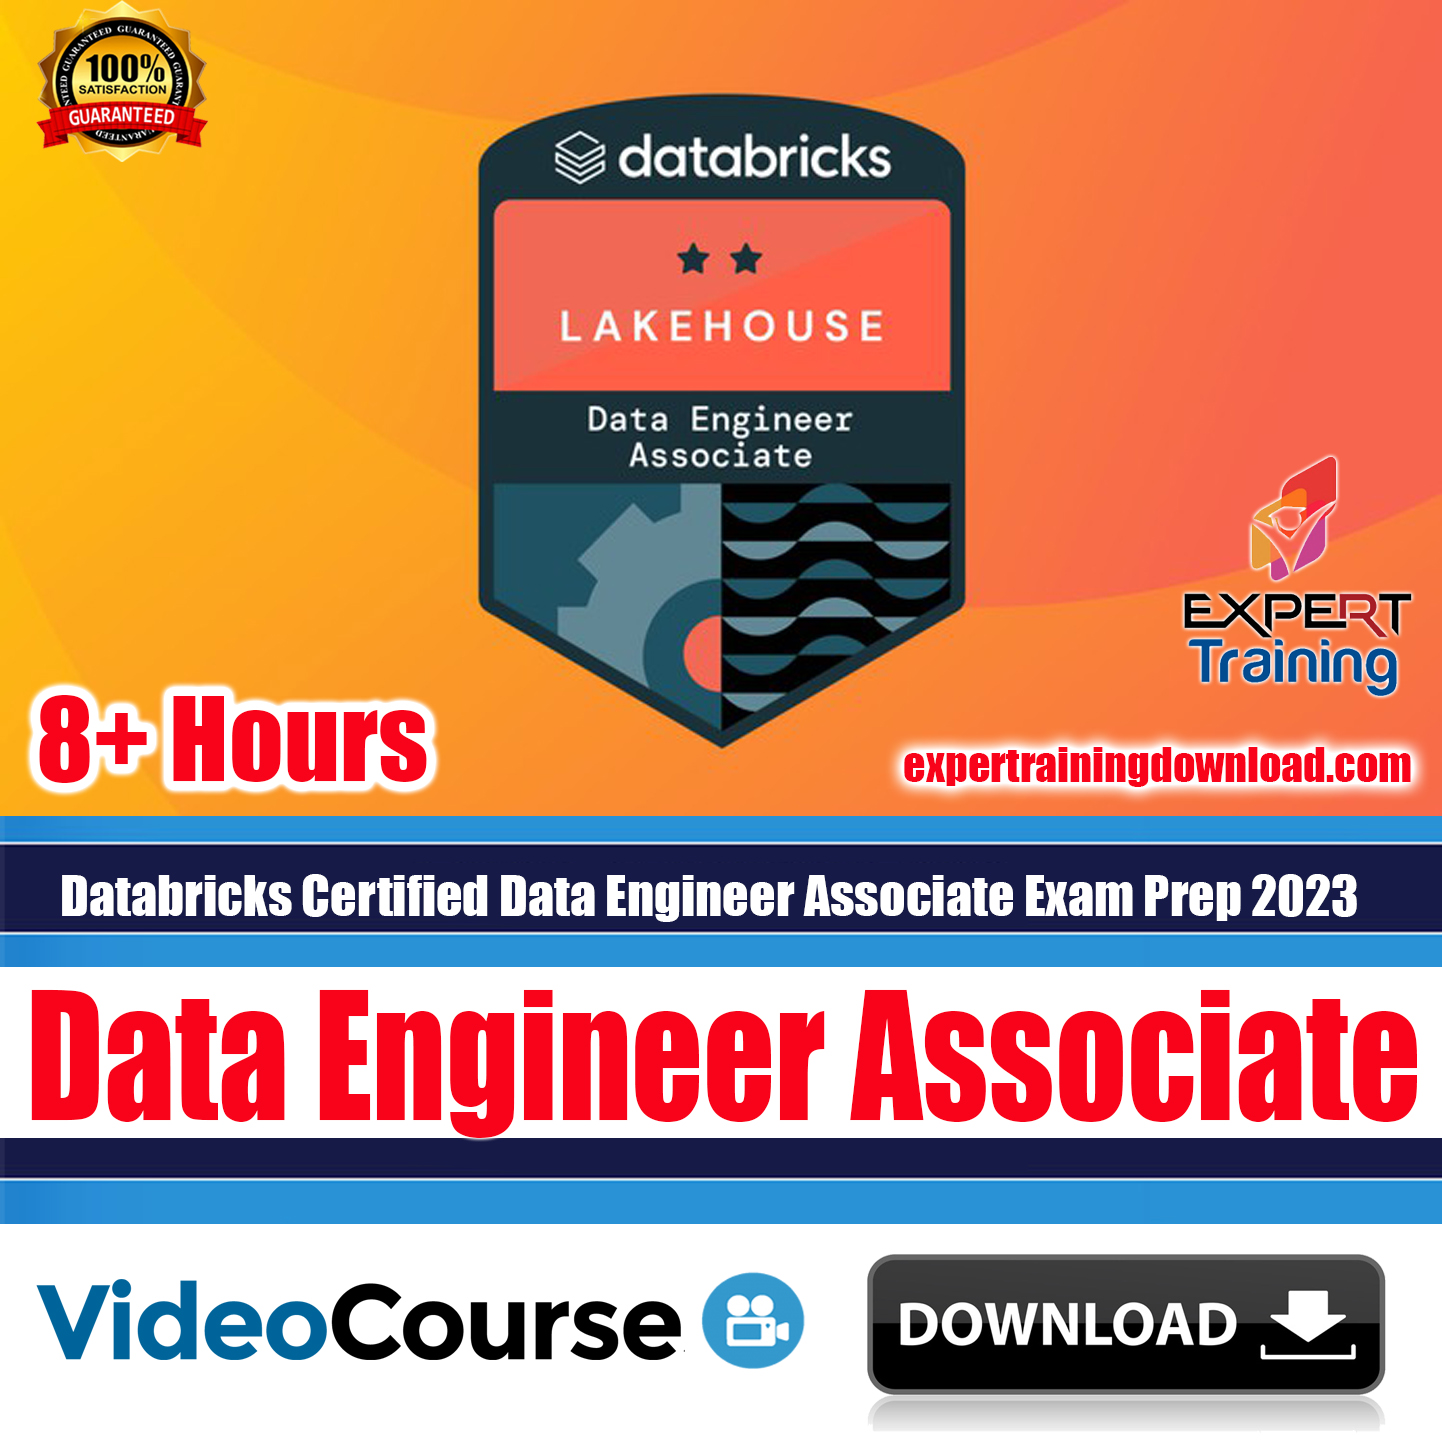 Databricks Certified Data Engineer Associate Exam Prep 2023